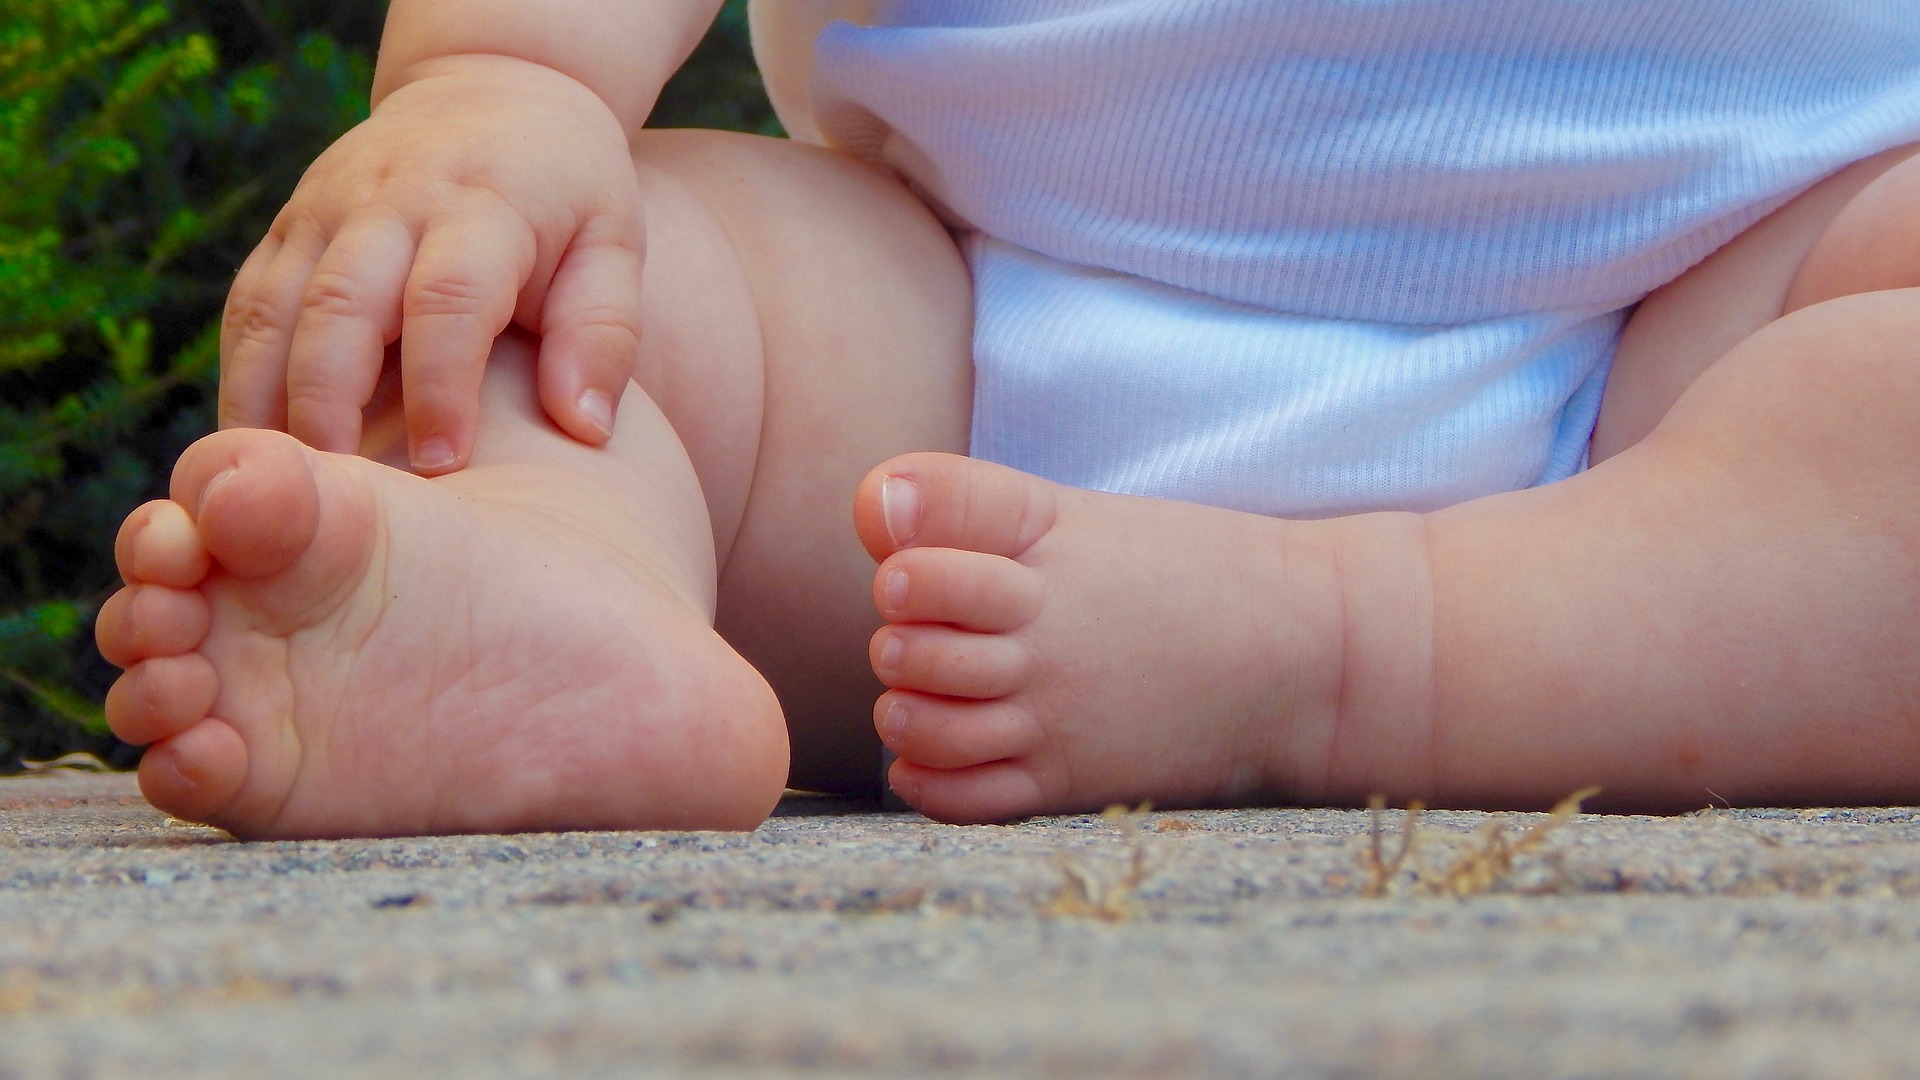 Malattia genetica rara, inquadratura dei piedini di un bimbo seduto